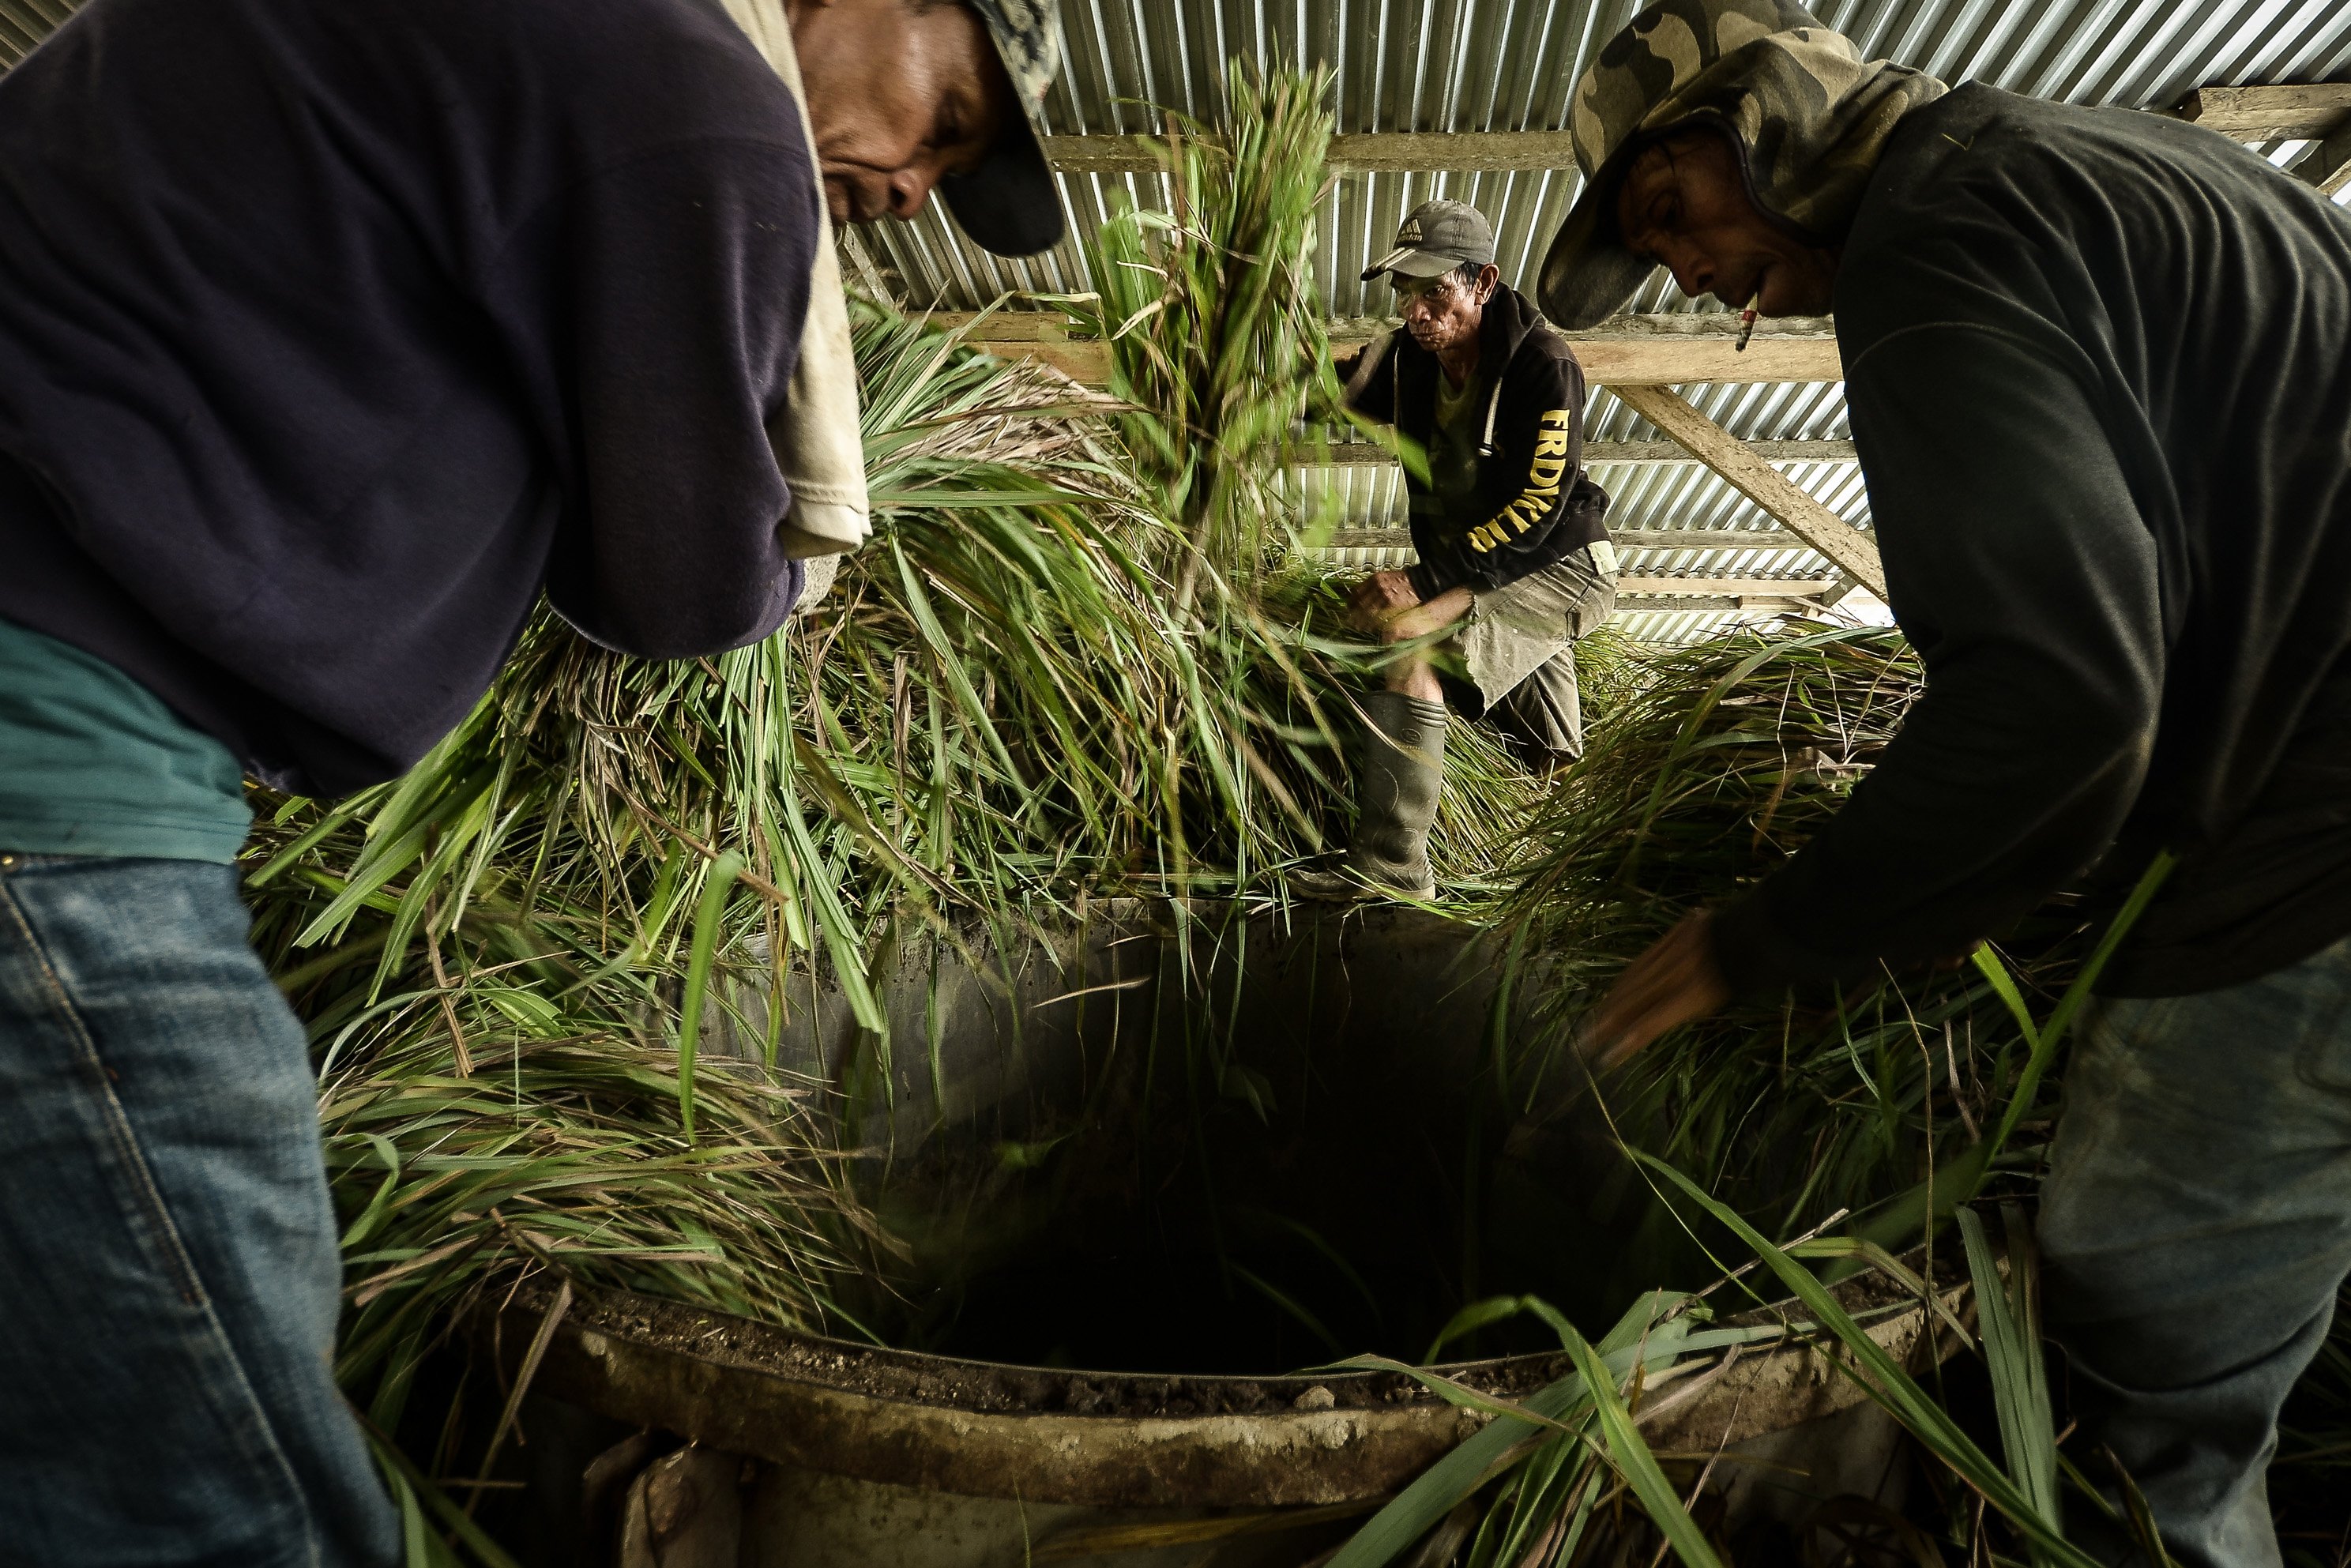 Sejumlah pekerja memasukkan daun serai wangi ke dalam tungku penyulingan di Desa Tountimomor, Kakas Barat, Minahasa, Sulawesi Utara. Minyak hasil sulingan serai wangi digunakan sebagai bahan pembuatan minyak wangi, sabun, sampo dan produk lainnya. 